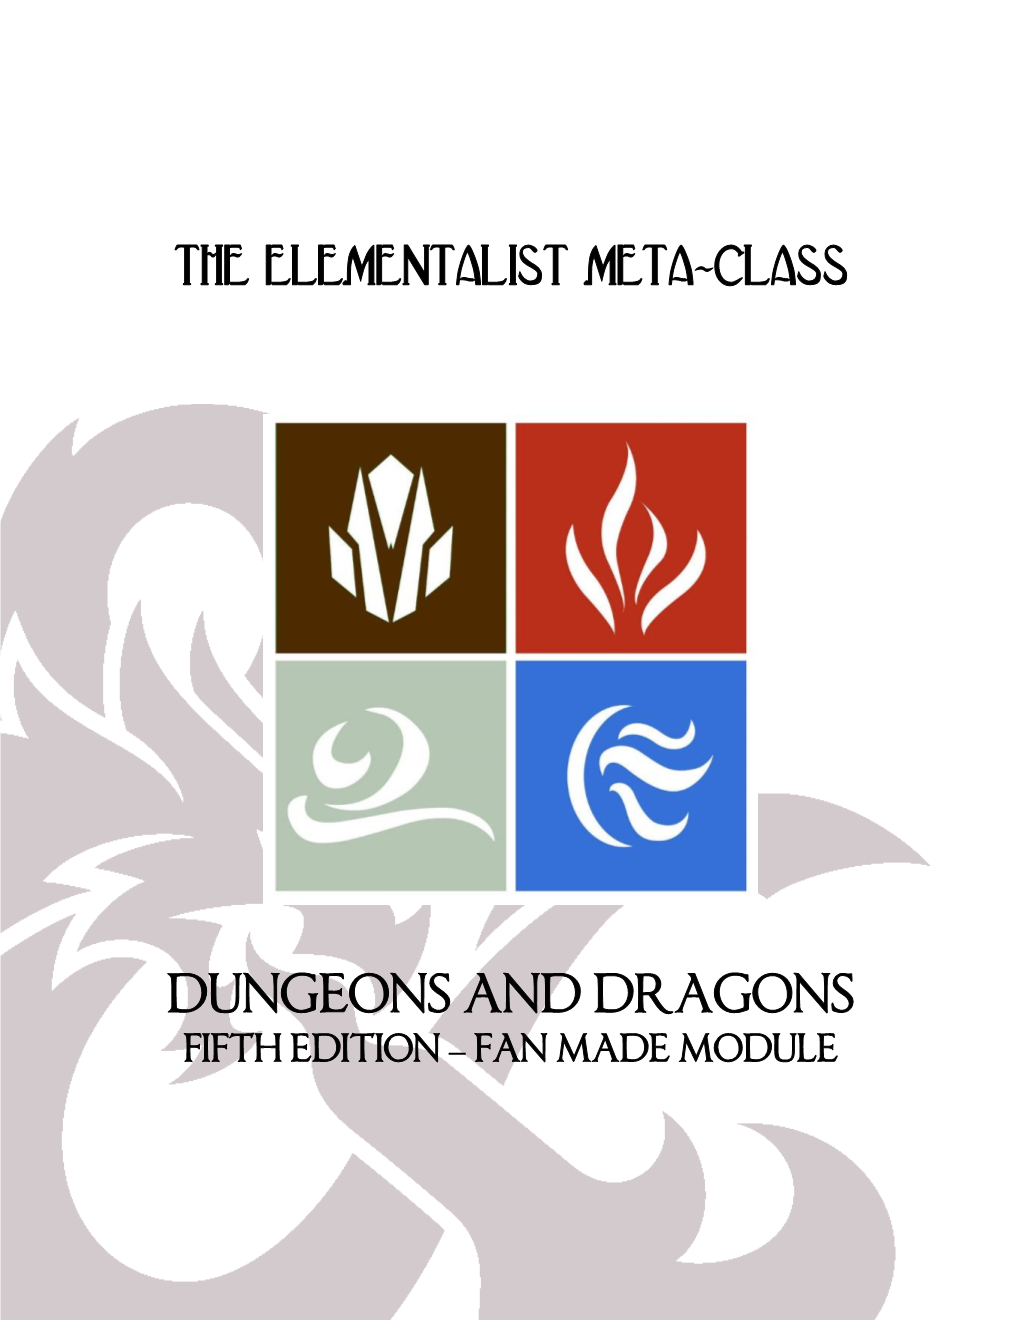 The Elementalist Meta-Class